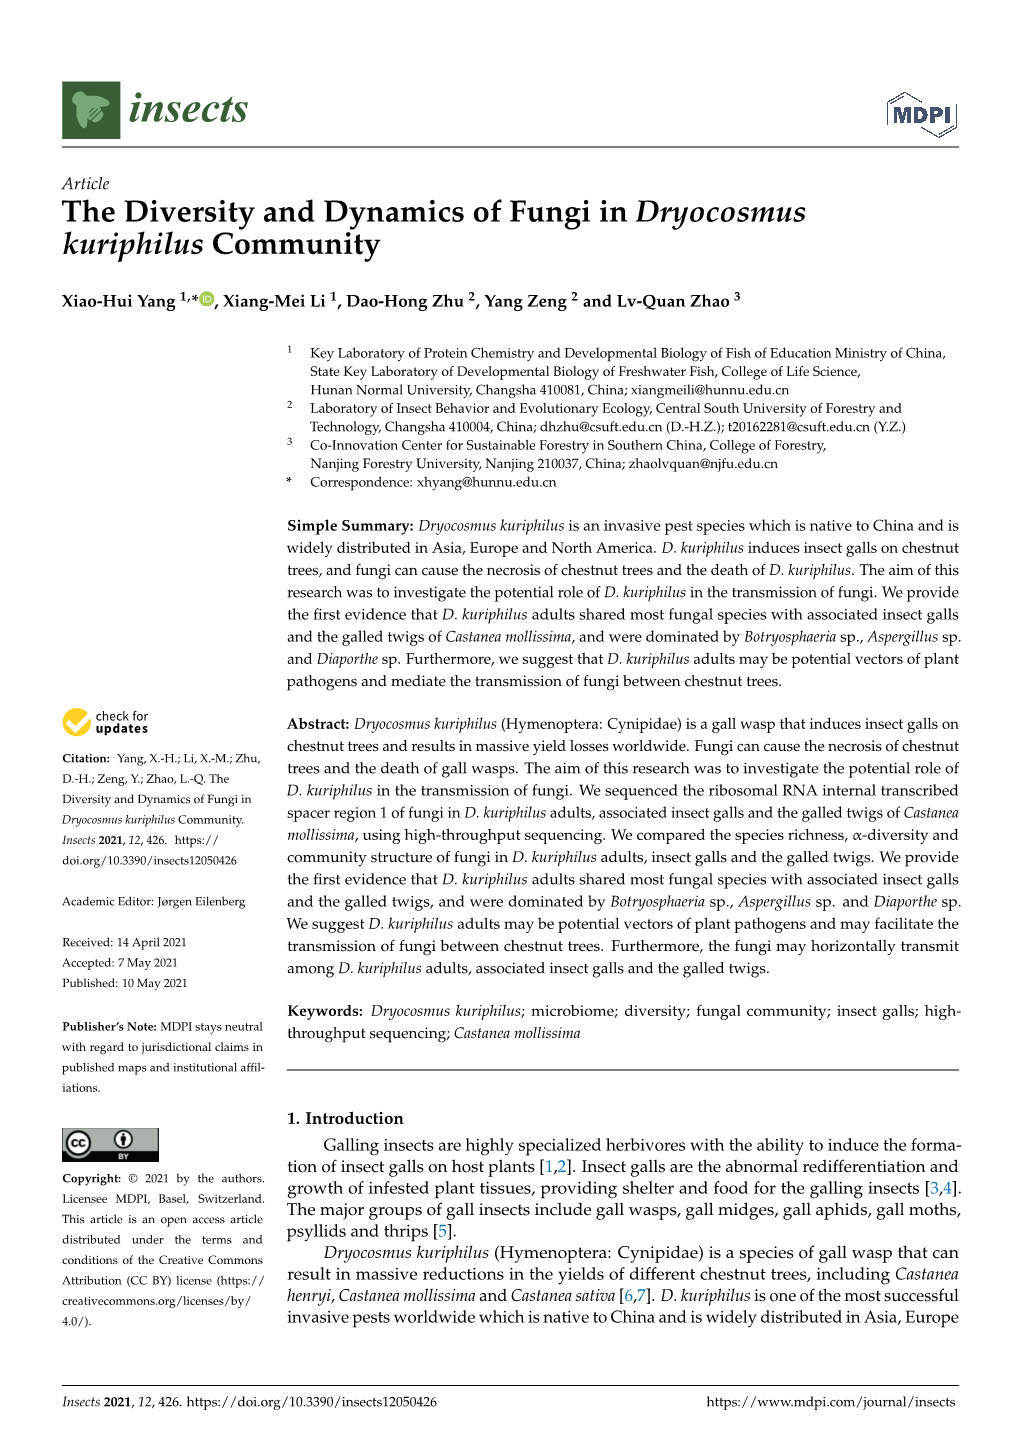 The Diversity and Dynamics of Fungi in Dryocosmus Kuriphilus Community